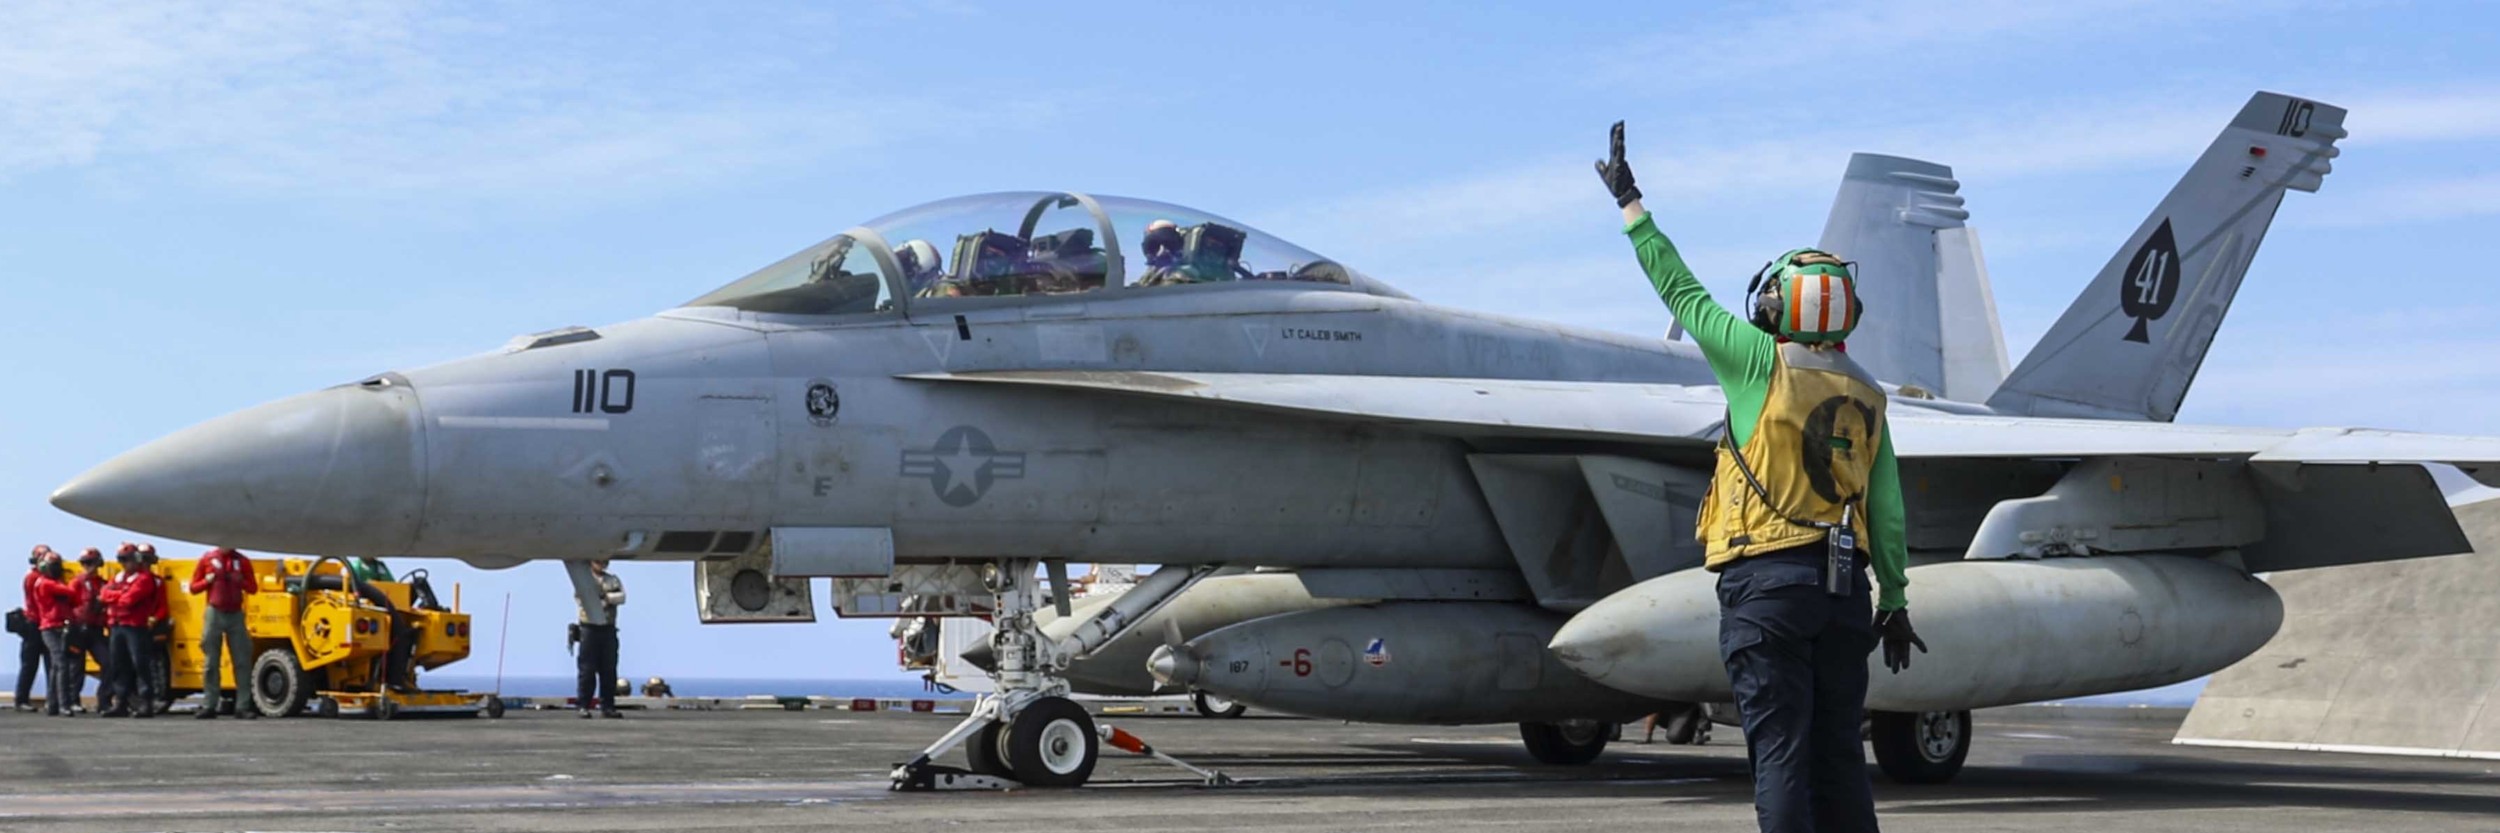 vfa-41 black aces strike fighter squadron f/a-18f super hornet cvw-9 cvn-72 uss abraham lincoln us navy 71